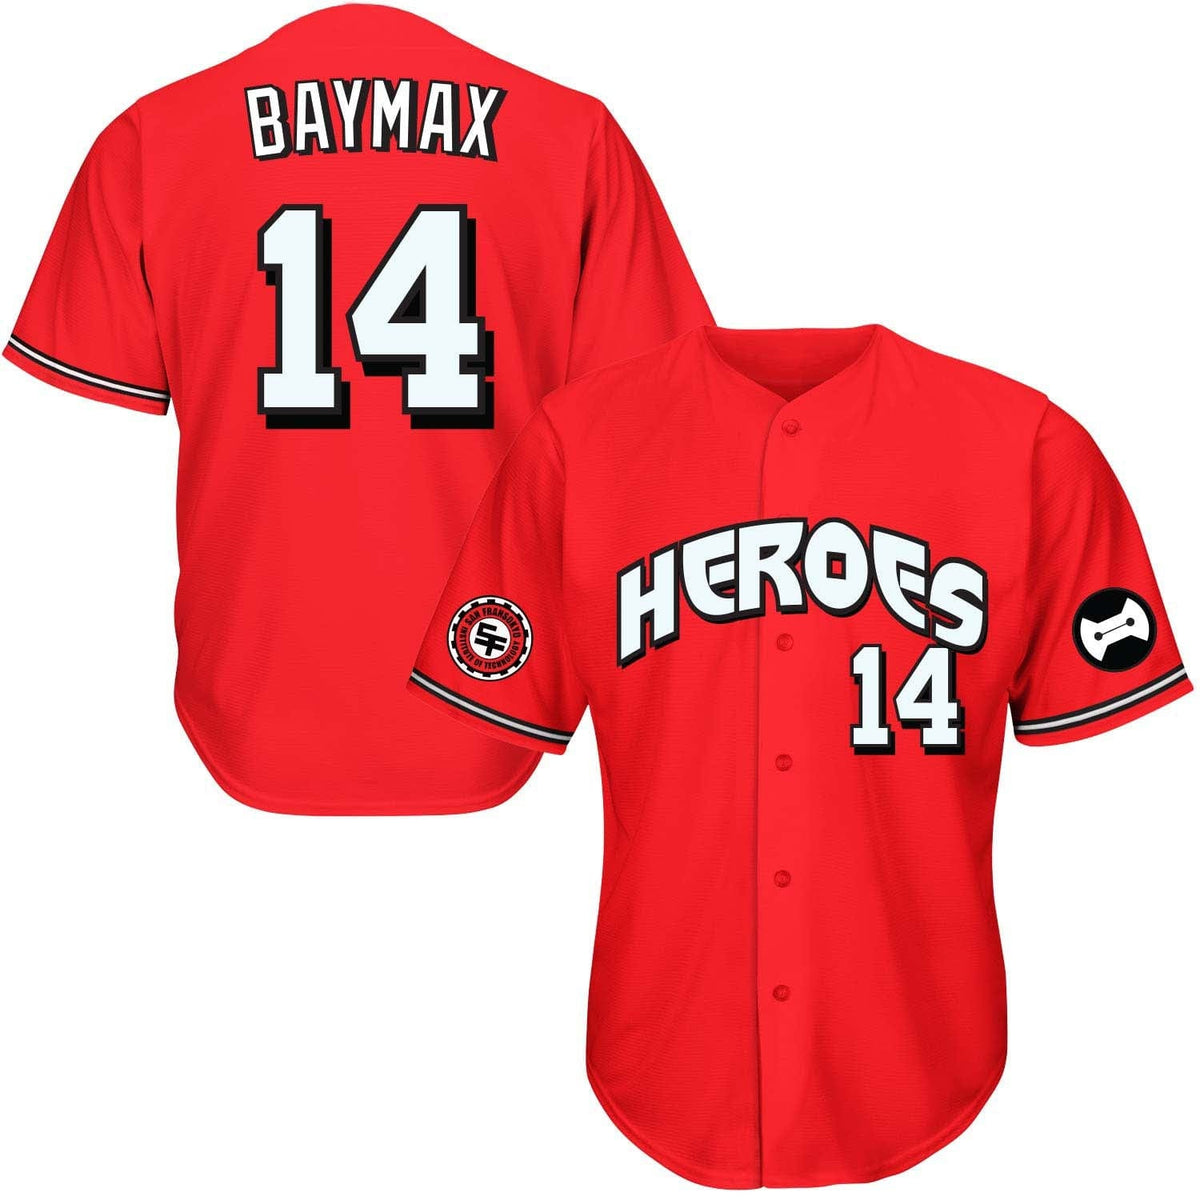 Heroes Baymax Baseball Jersey